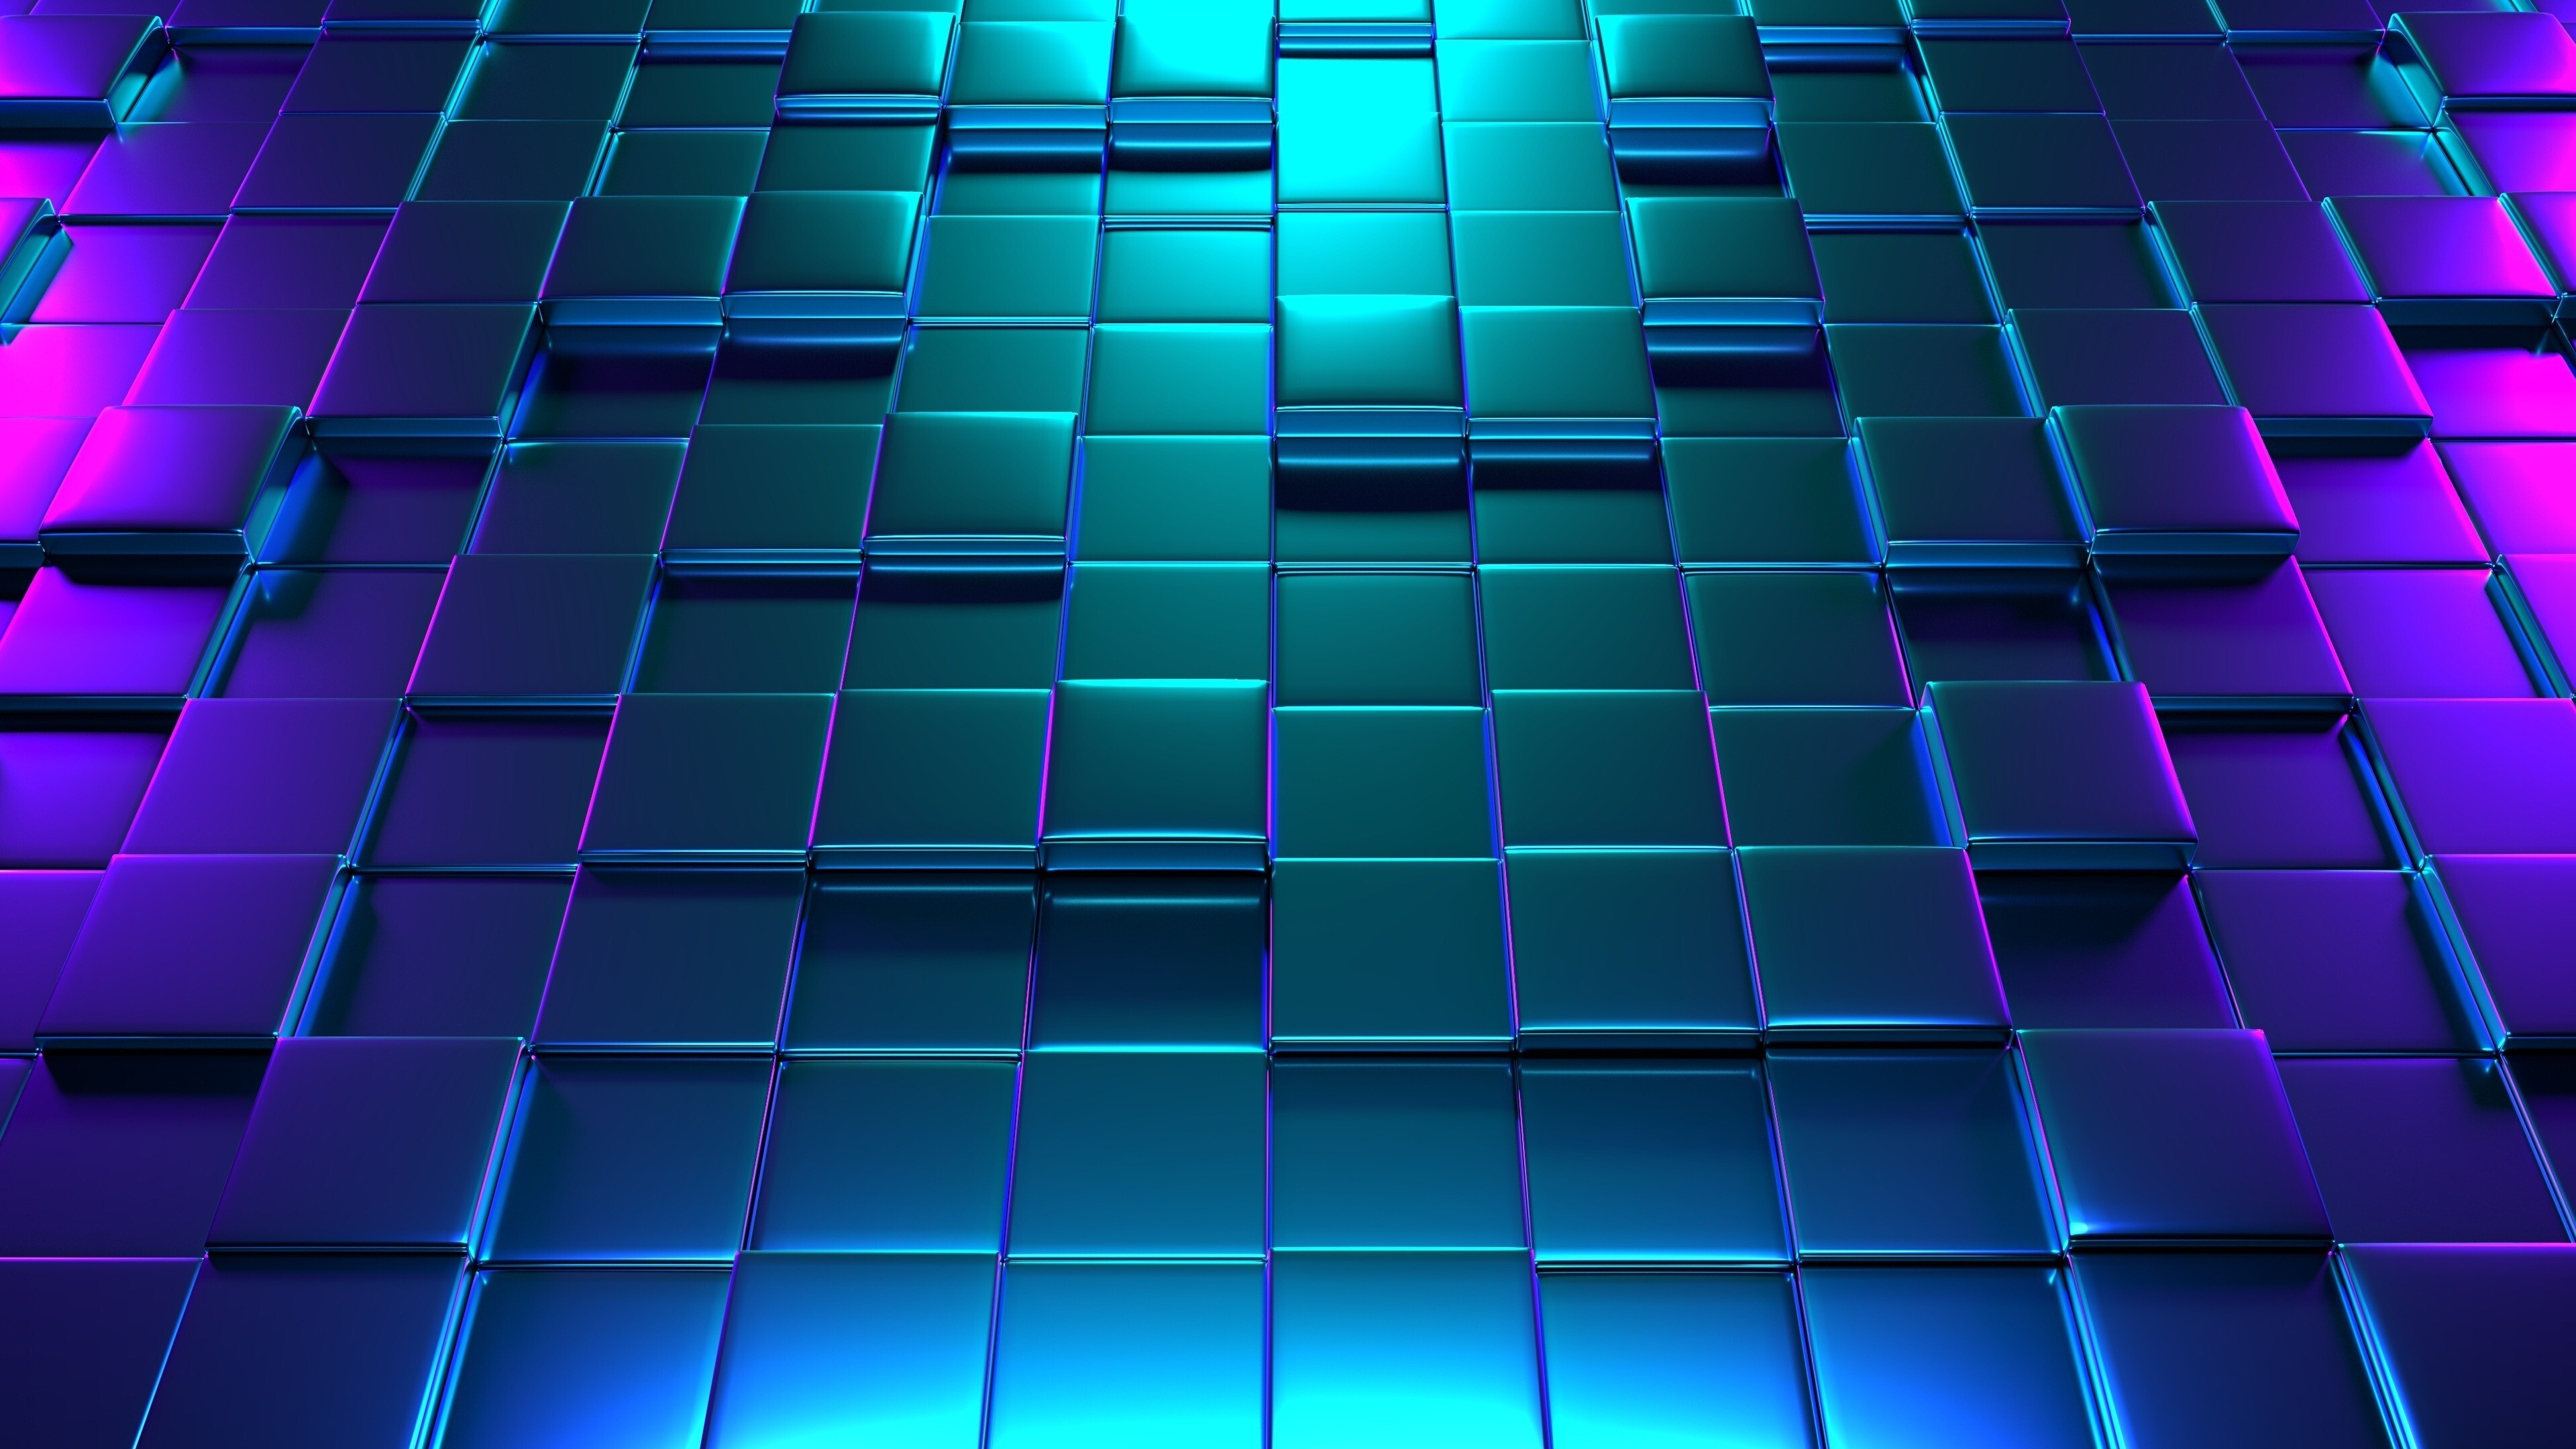 4k Wallpaper Of 3d Colorful Cubes HD